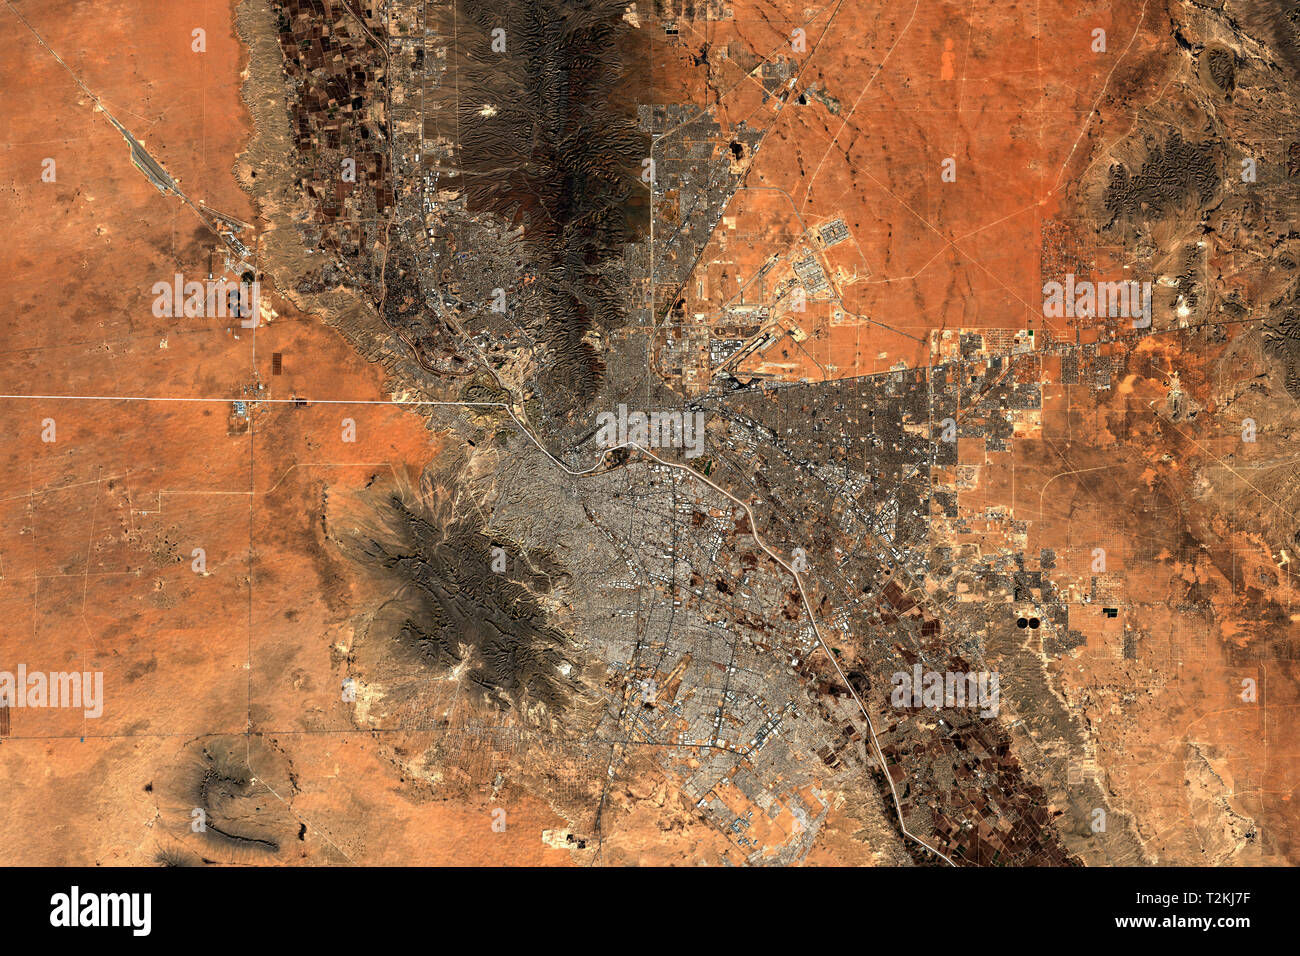 El Paso in den USA und Ciudad Juarez in Mexiko vom Weltraum aus gesehen vom Weltraum aus gesehen - enthält geänderte Copernicus Sentinel Data (2019) Stockfoto